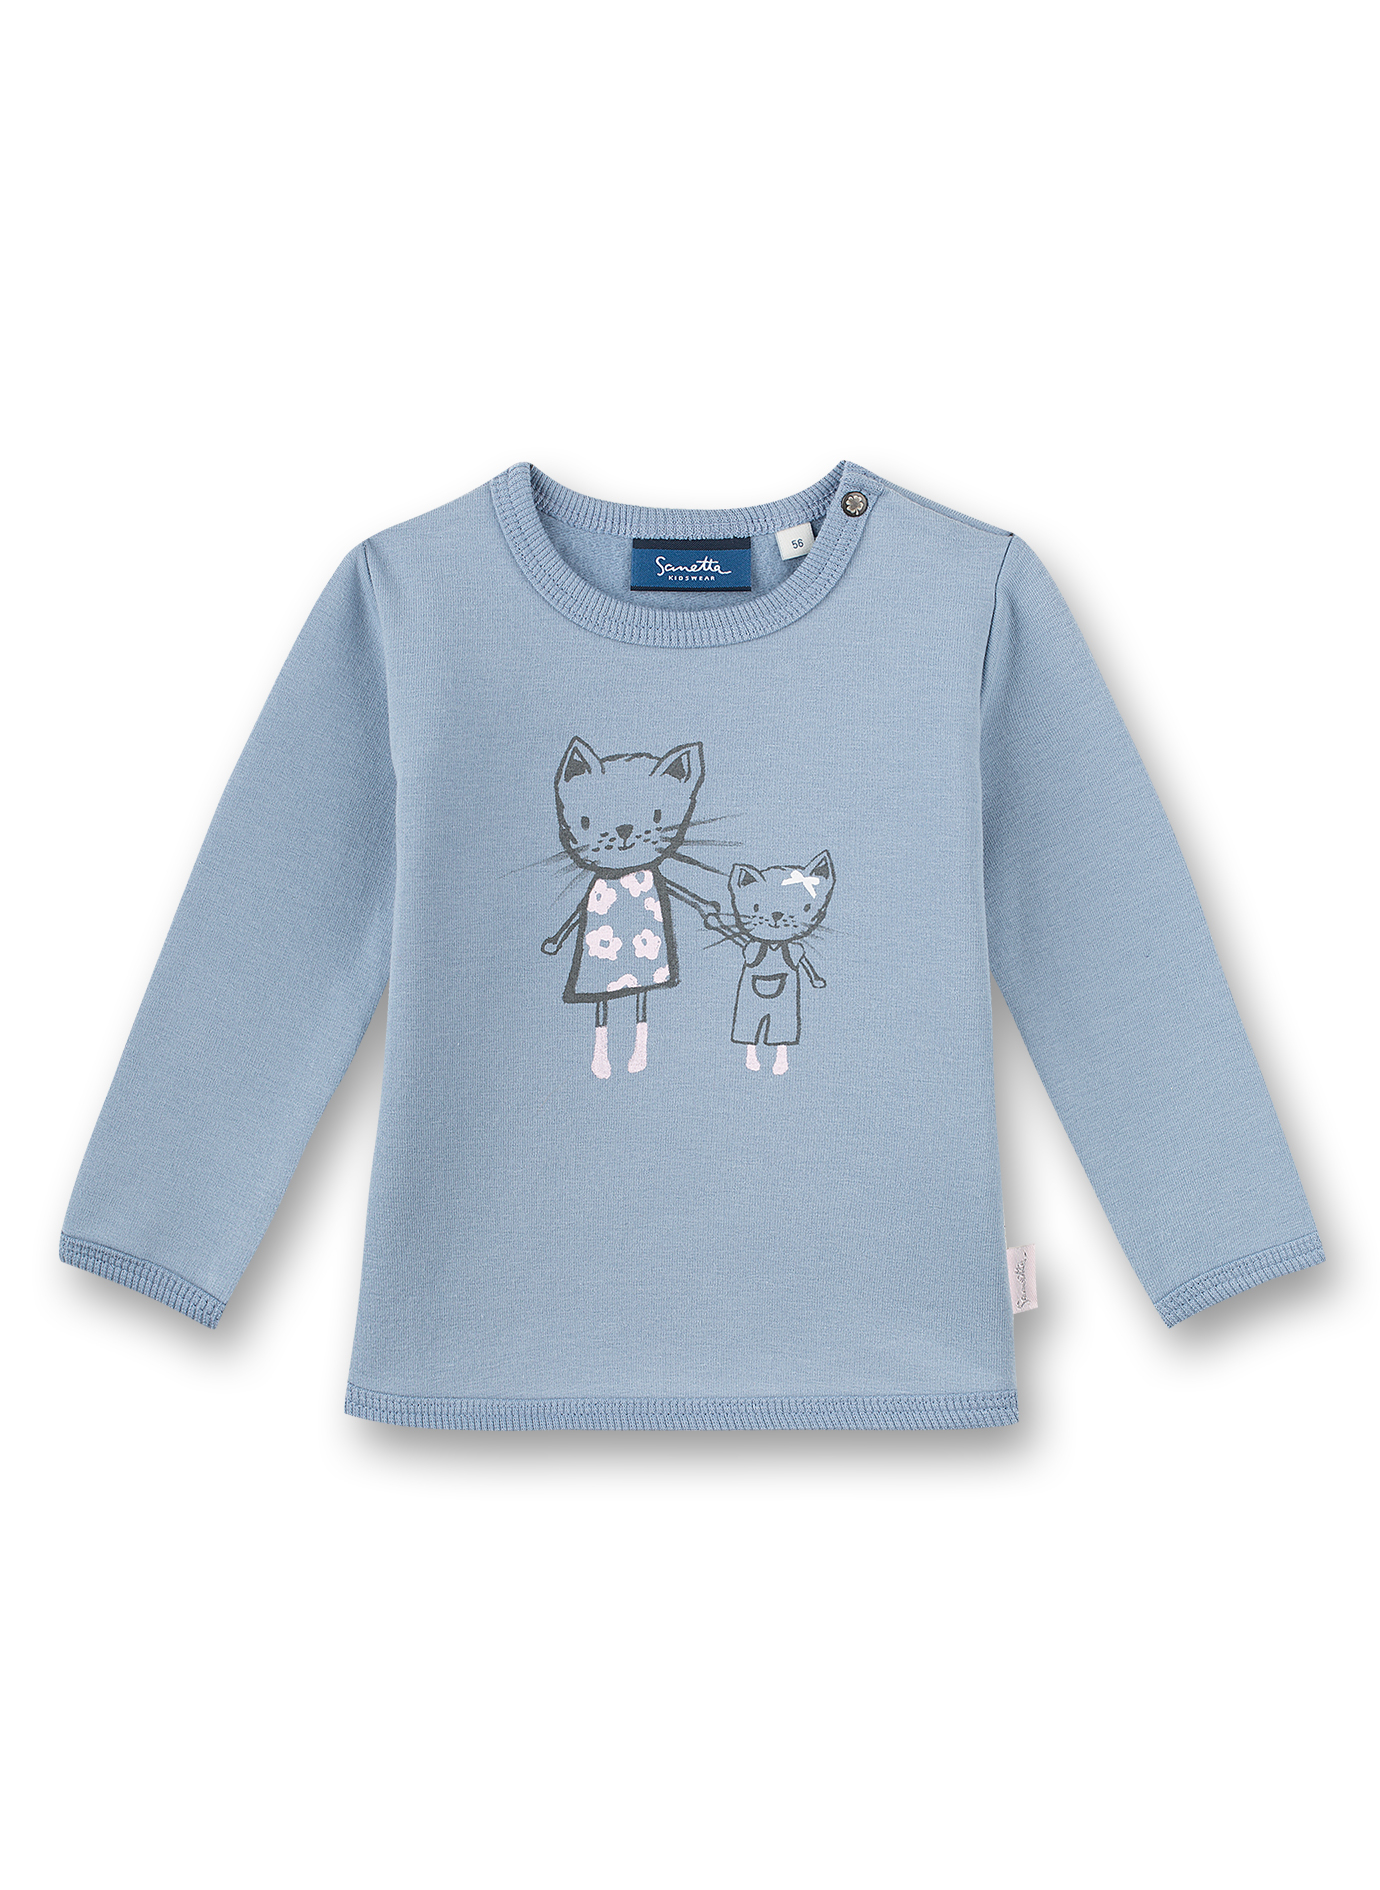 Mädchen-Sweatshirt Blau Emma the Cat 